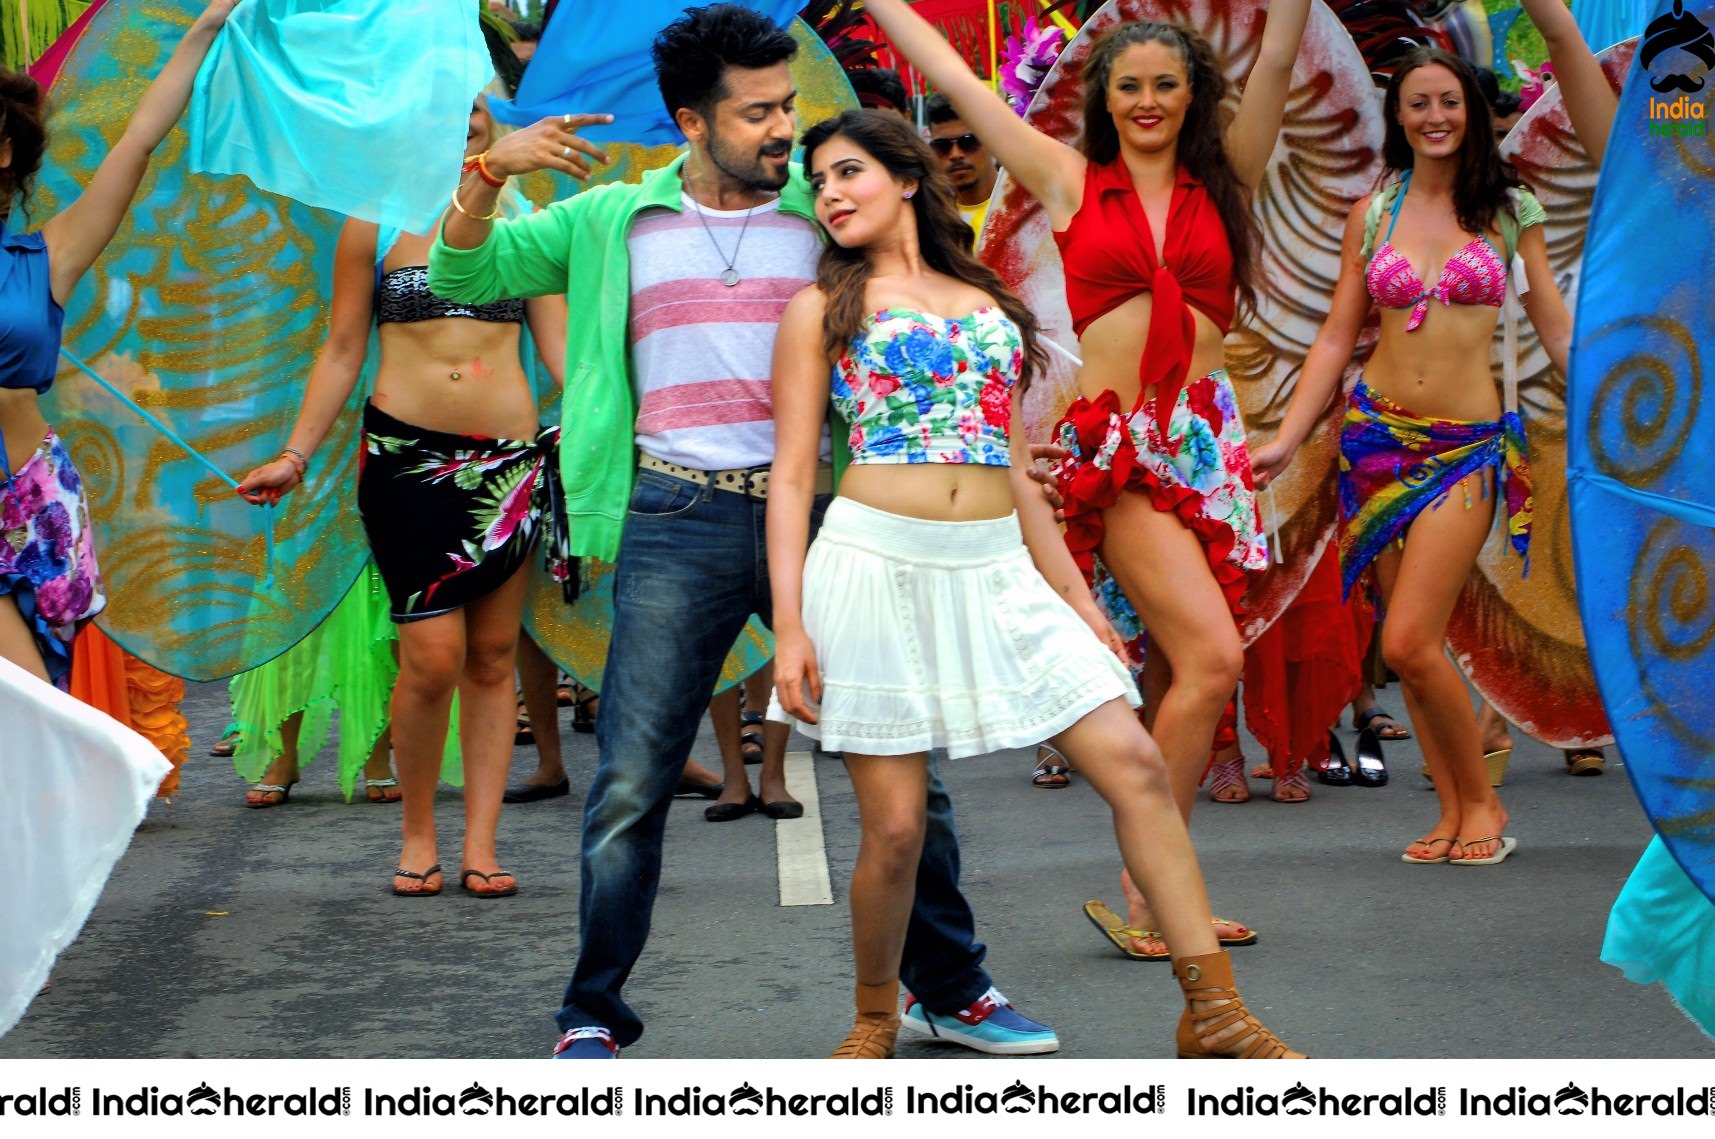 INDIA HERALD EXCLUSIVE Hot Samantha and Surya Unseen Stills from Sikindar Set 1